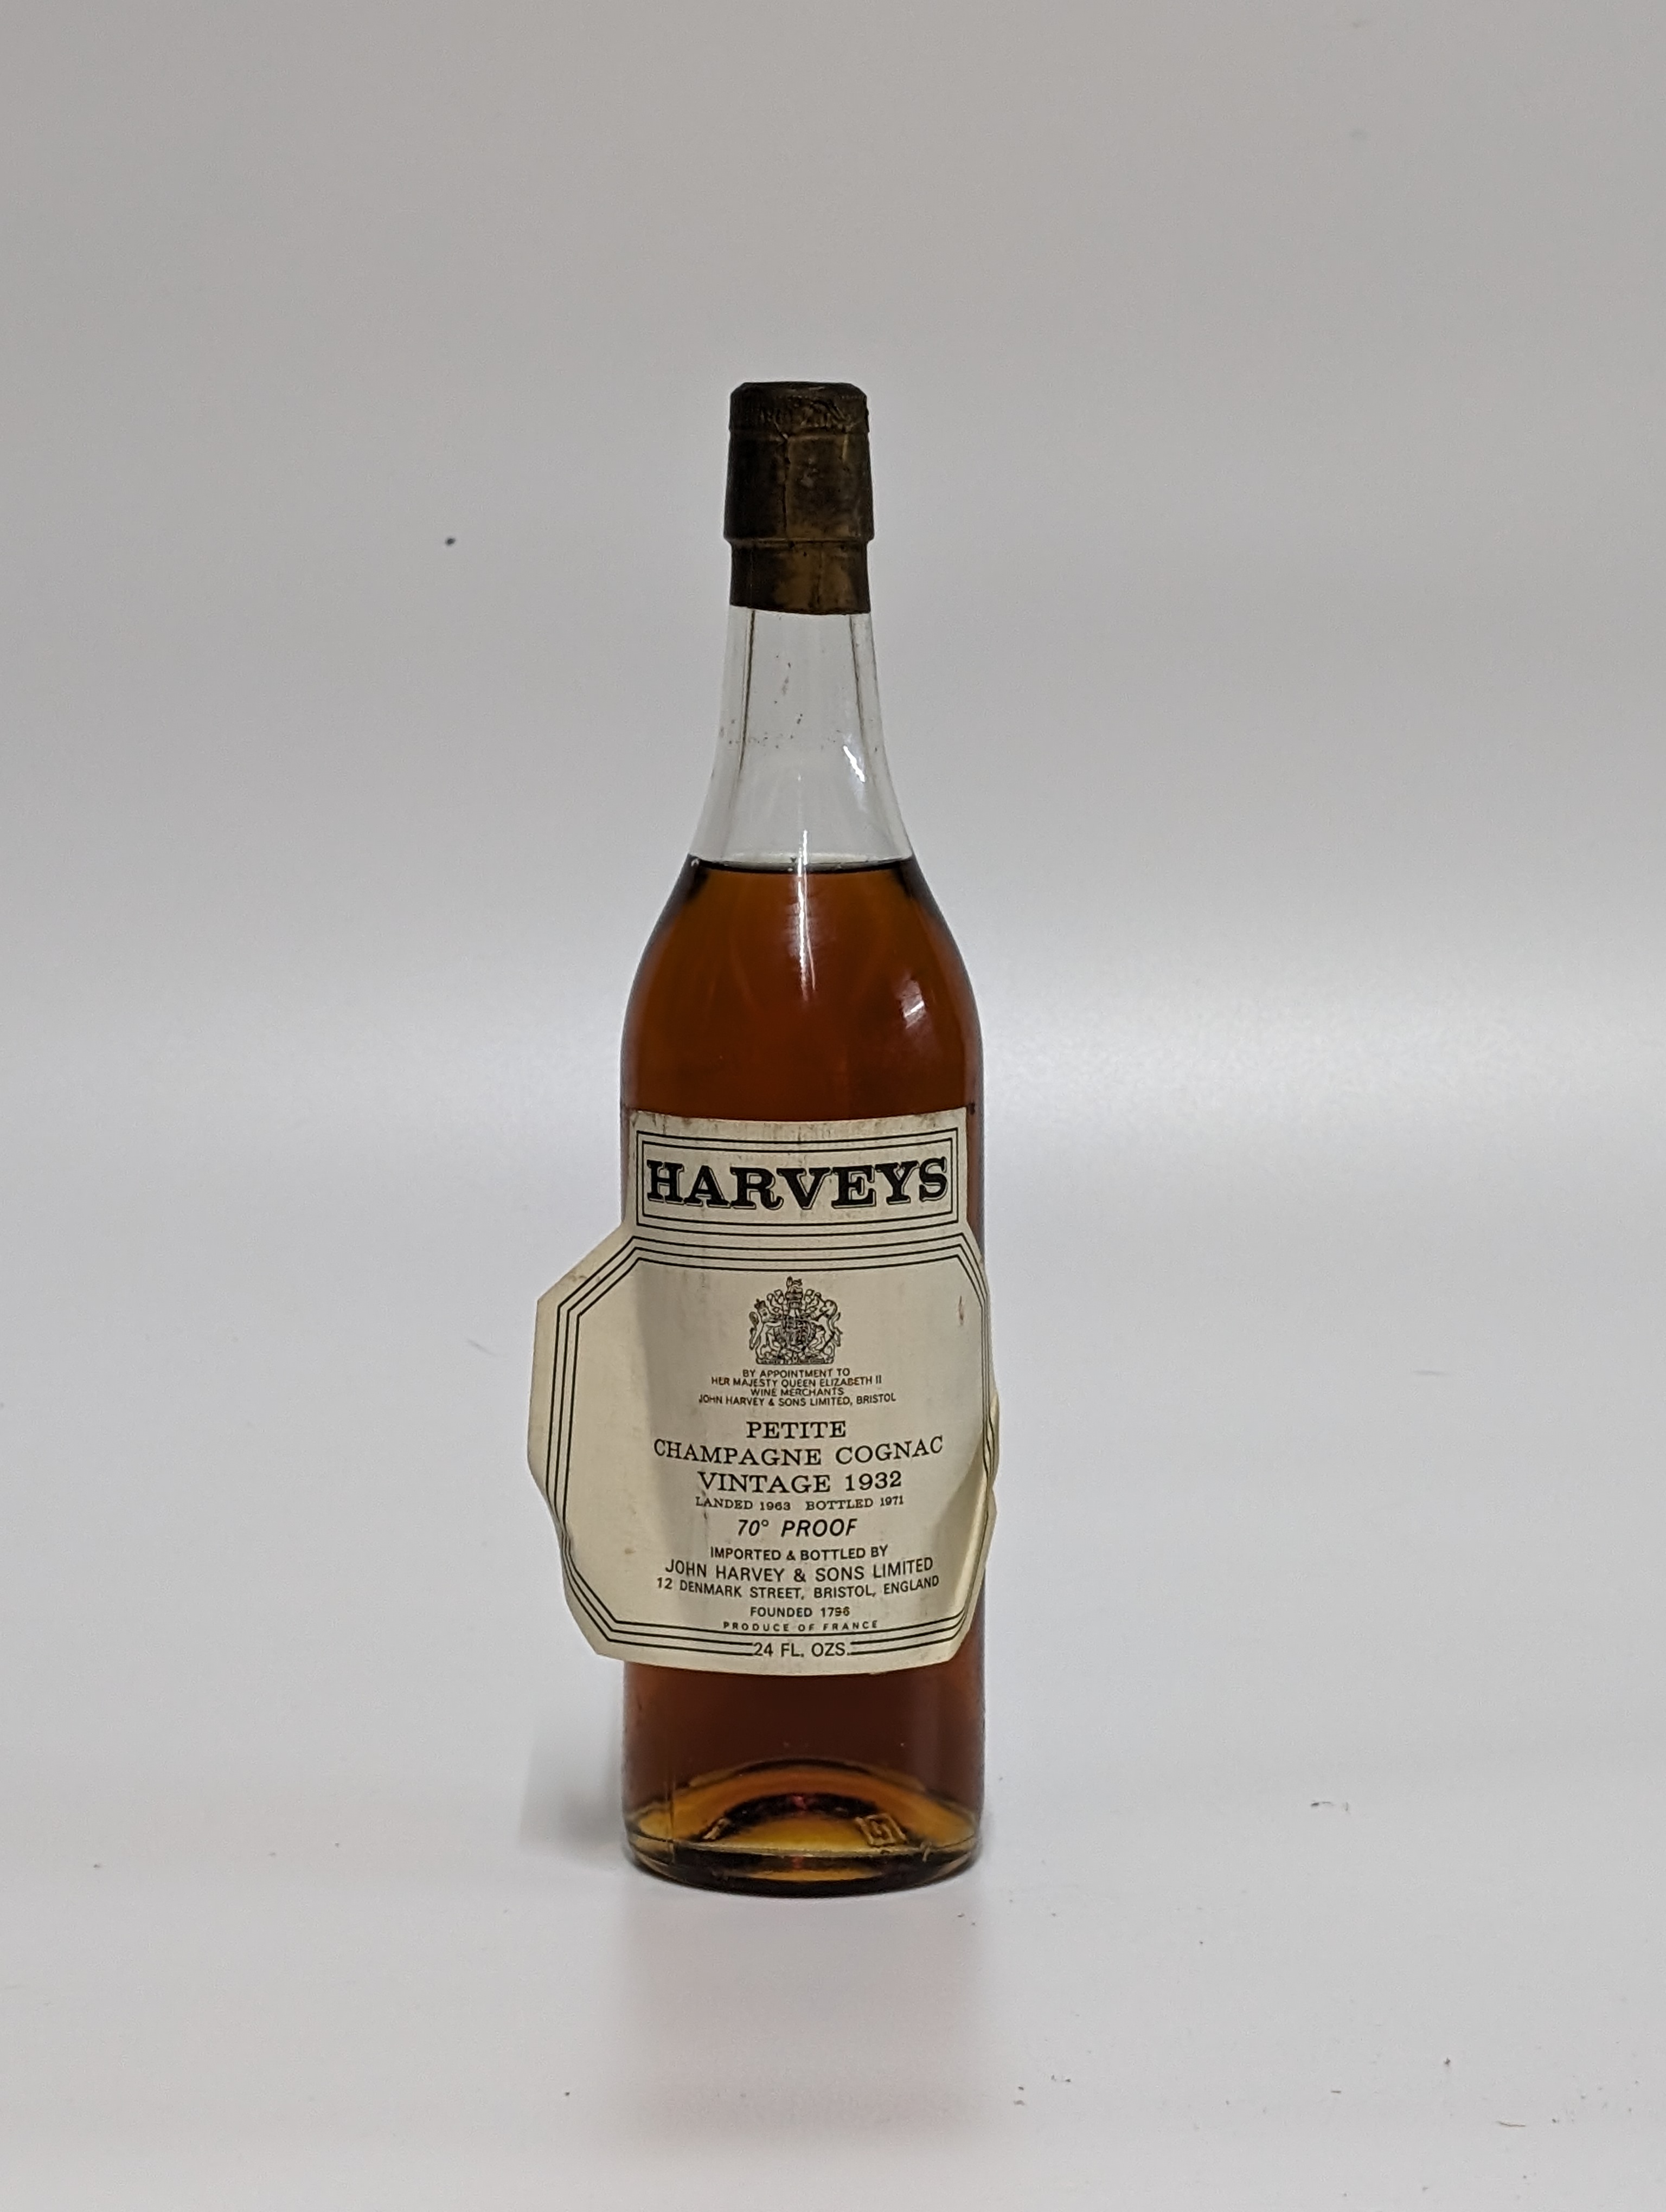 Harveys, Petite Champagne Cognac, 1932, bottled 1971, 70 proof, 24 fl. ozs, one bottle